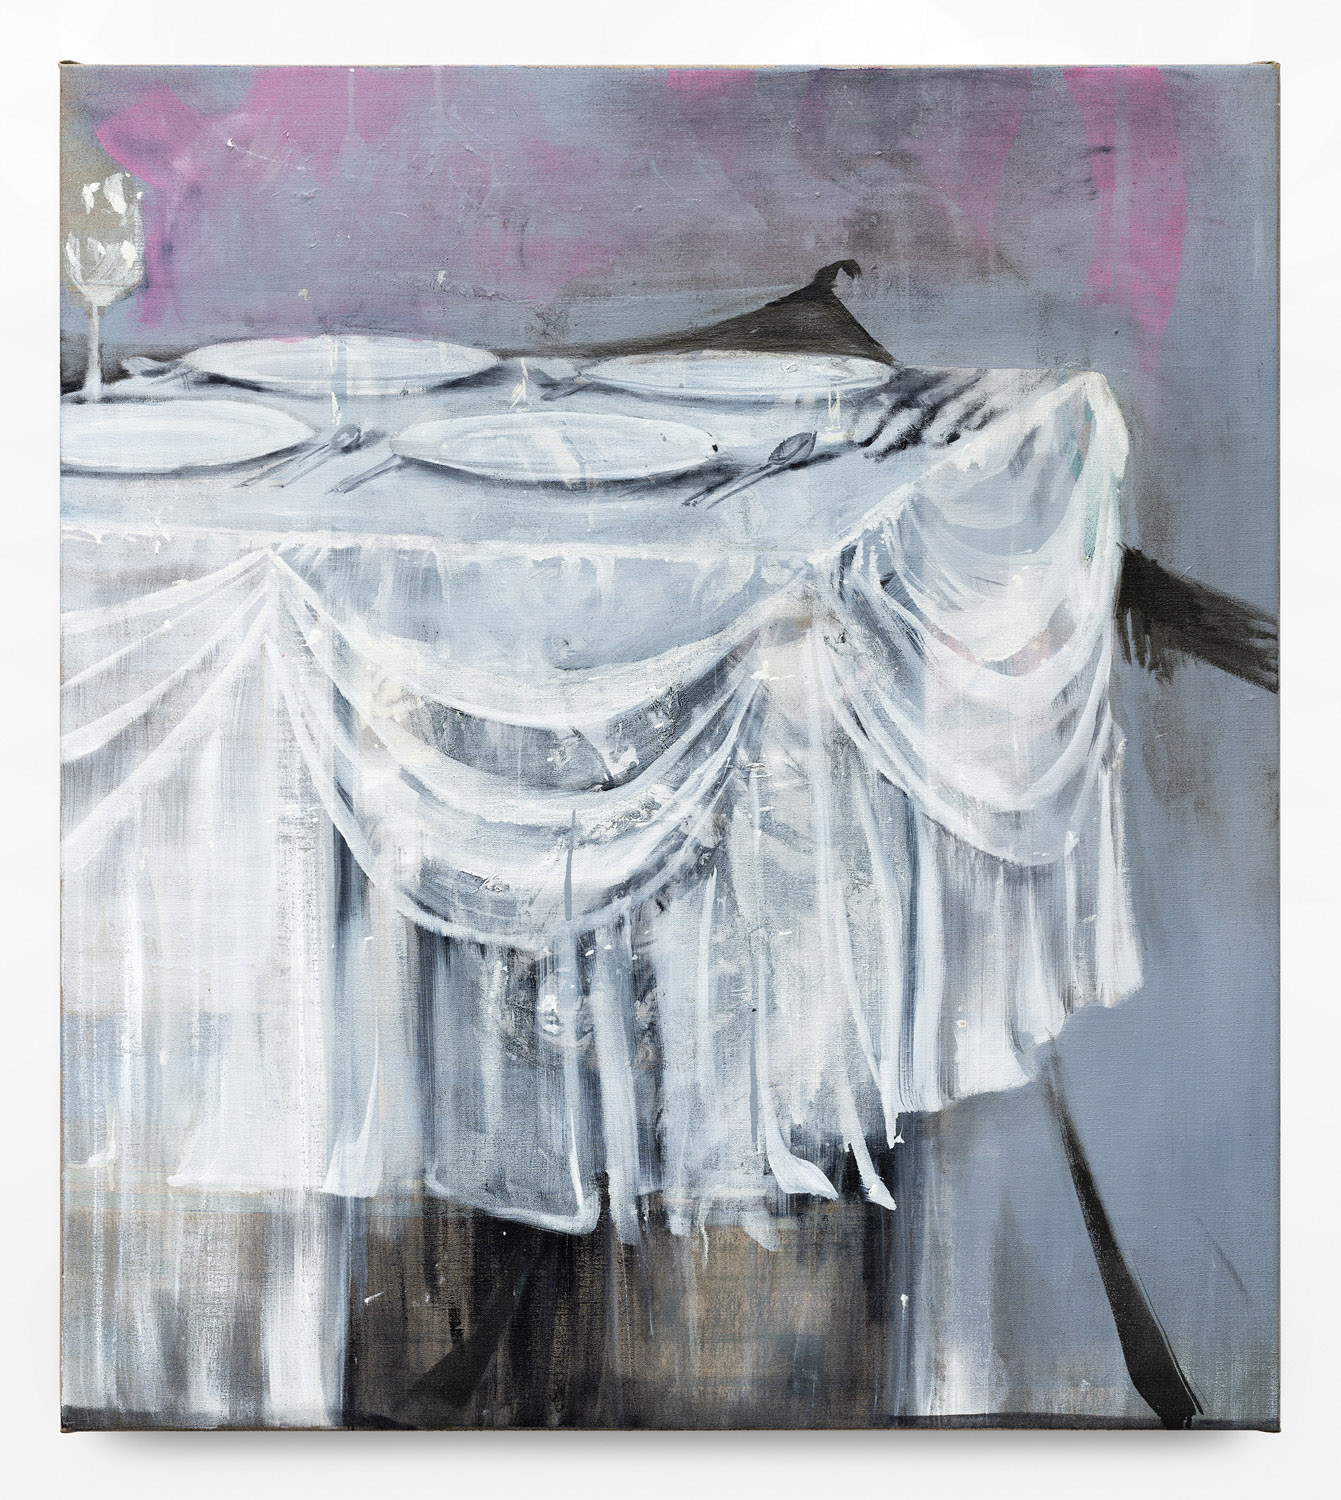 Alessandro Scarabello, Phoenix (Banquit), 2018, olio su tela, 100 x 89 cm, courtesy The Gallery Apart, Roma